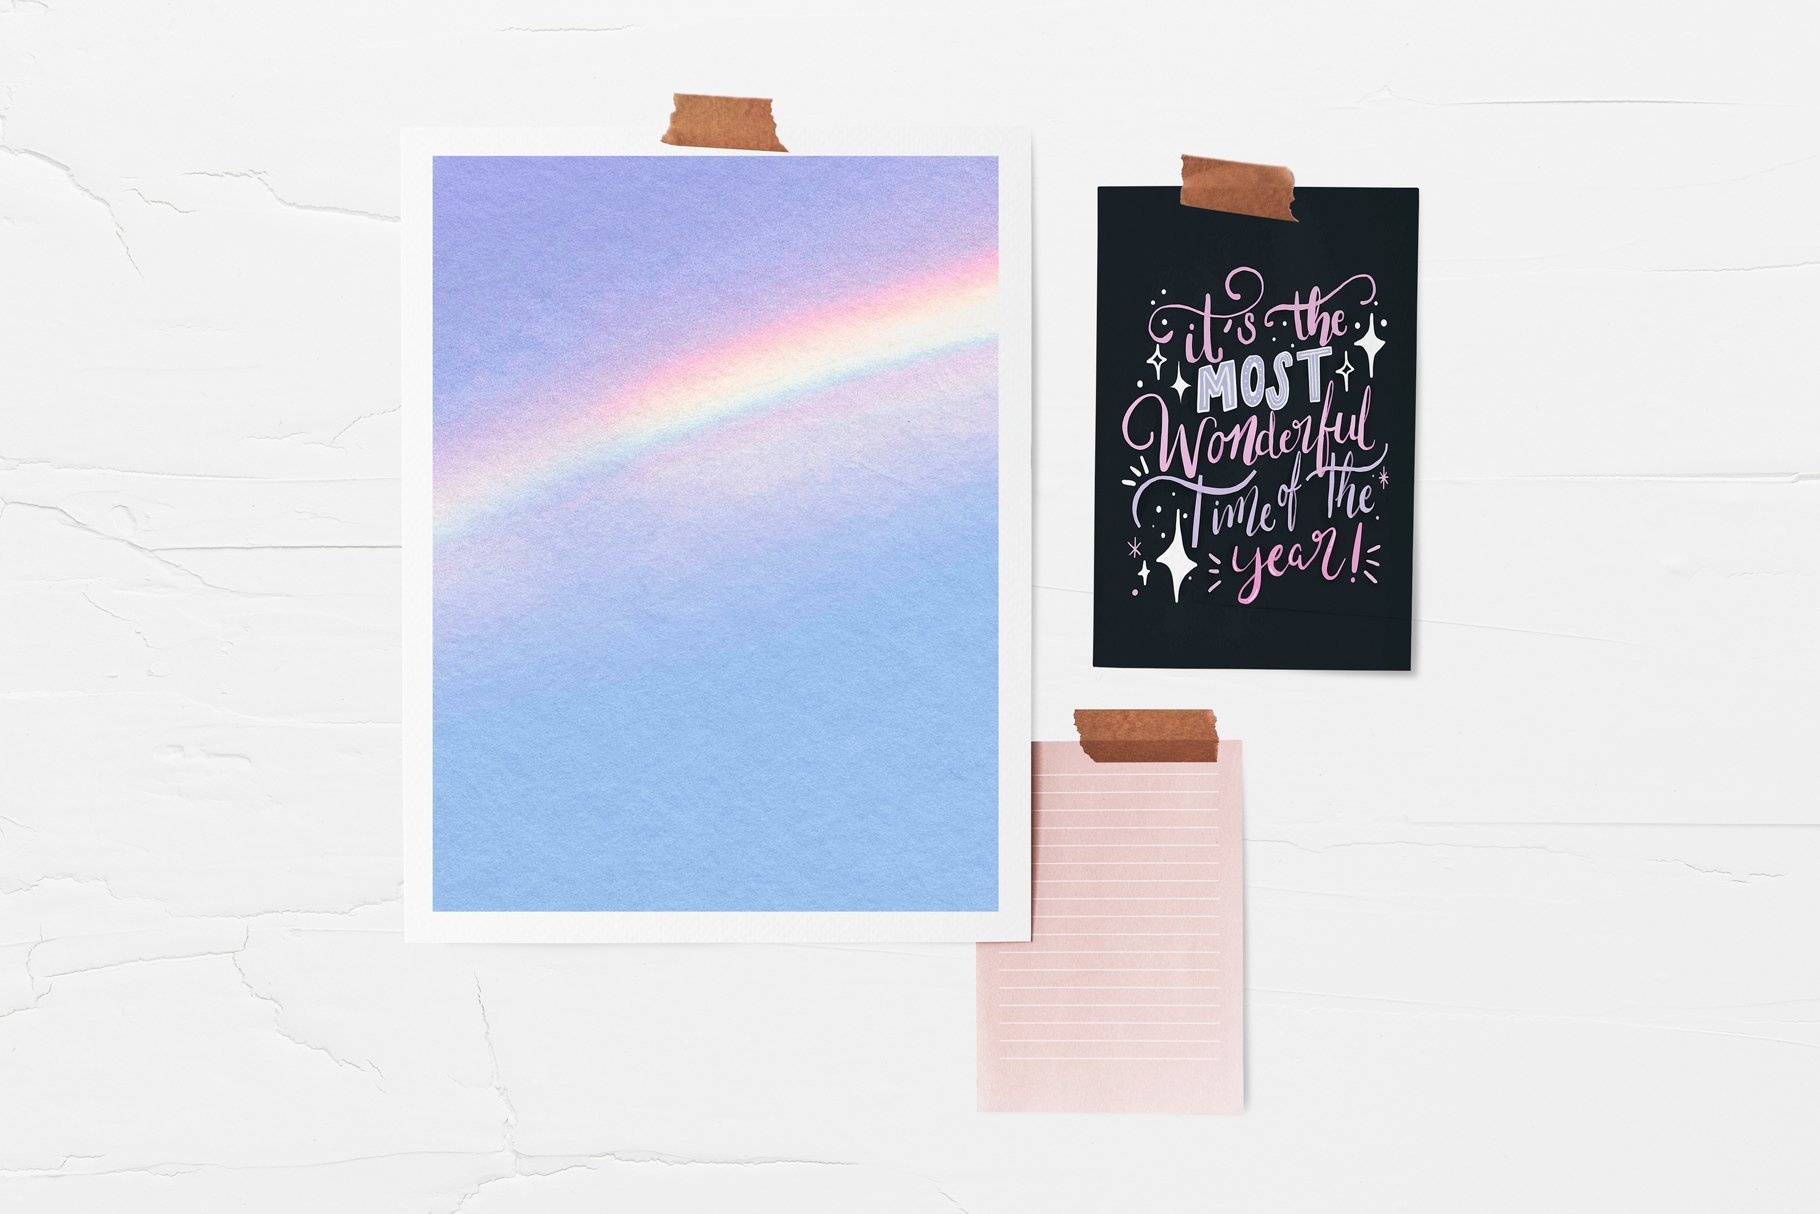 Unicorn Rainbow Paper Textures - Design Cuts